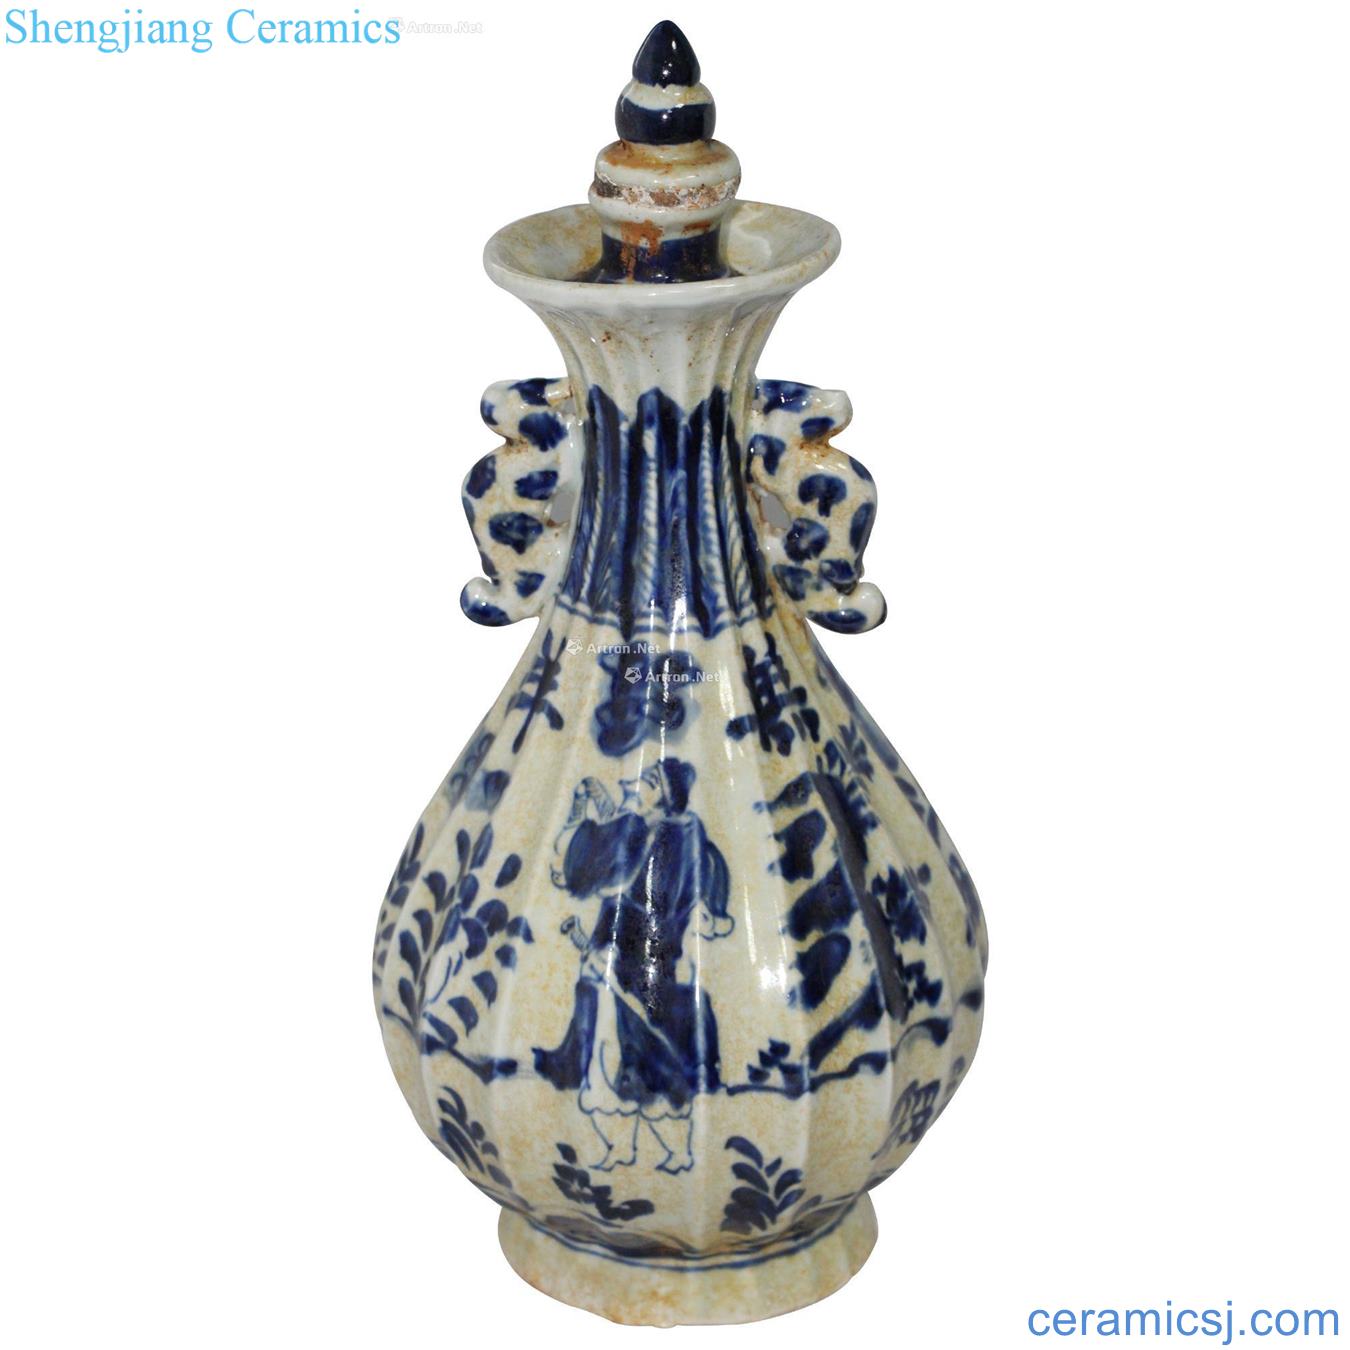 The yuan dynasty blue and white melon leng okho spring bottle